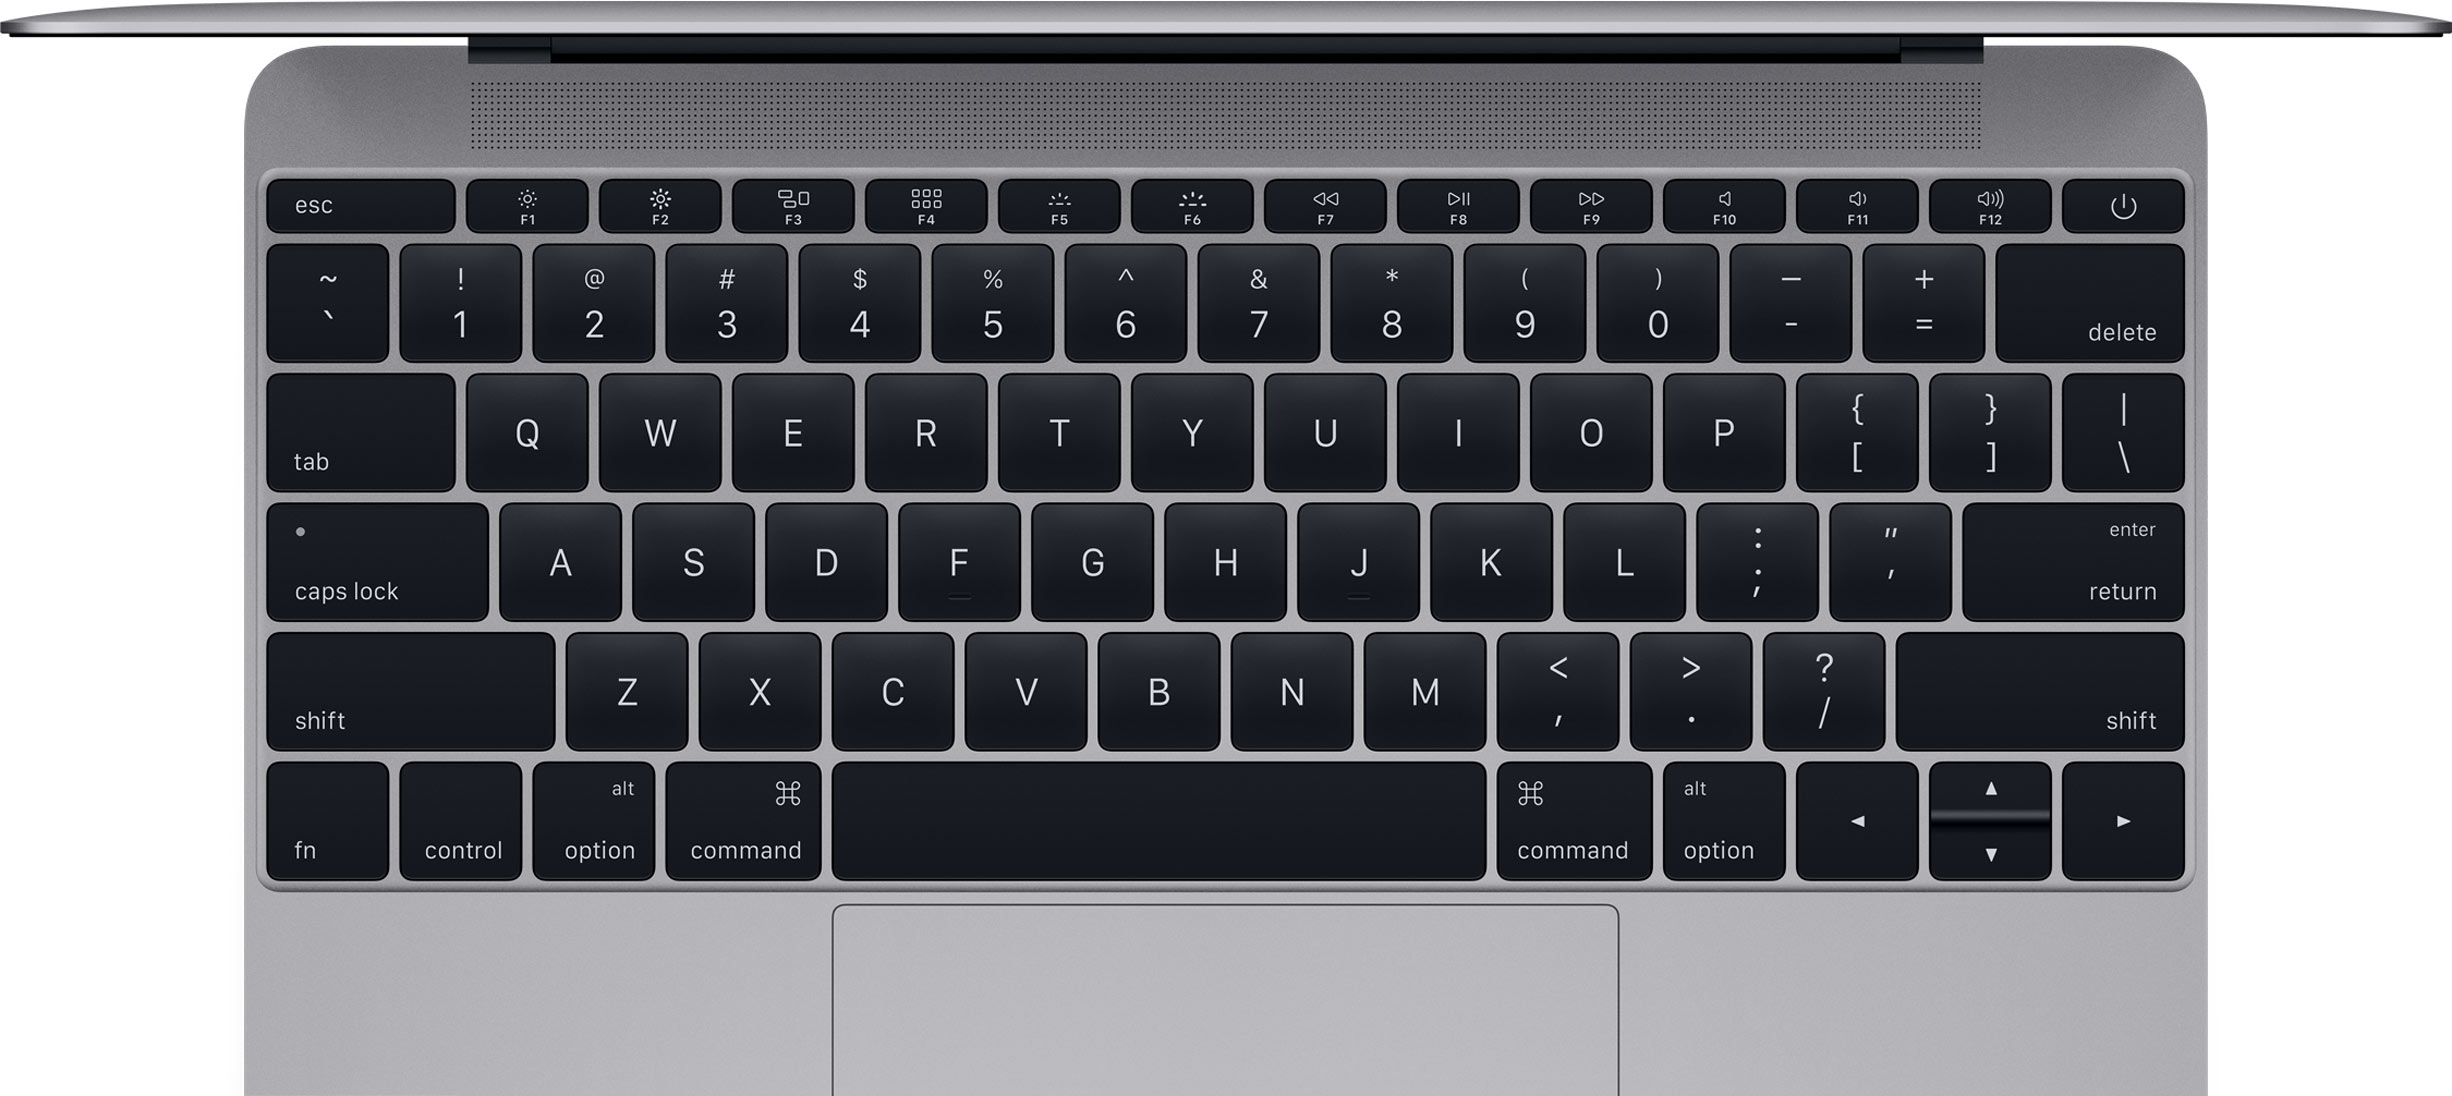 Mac clean app keyboard